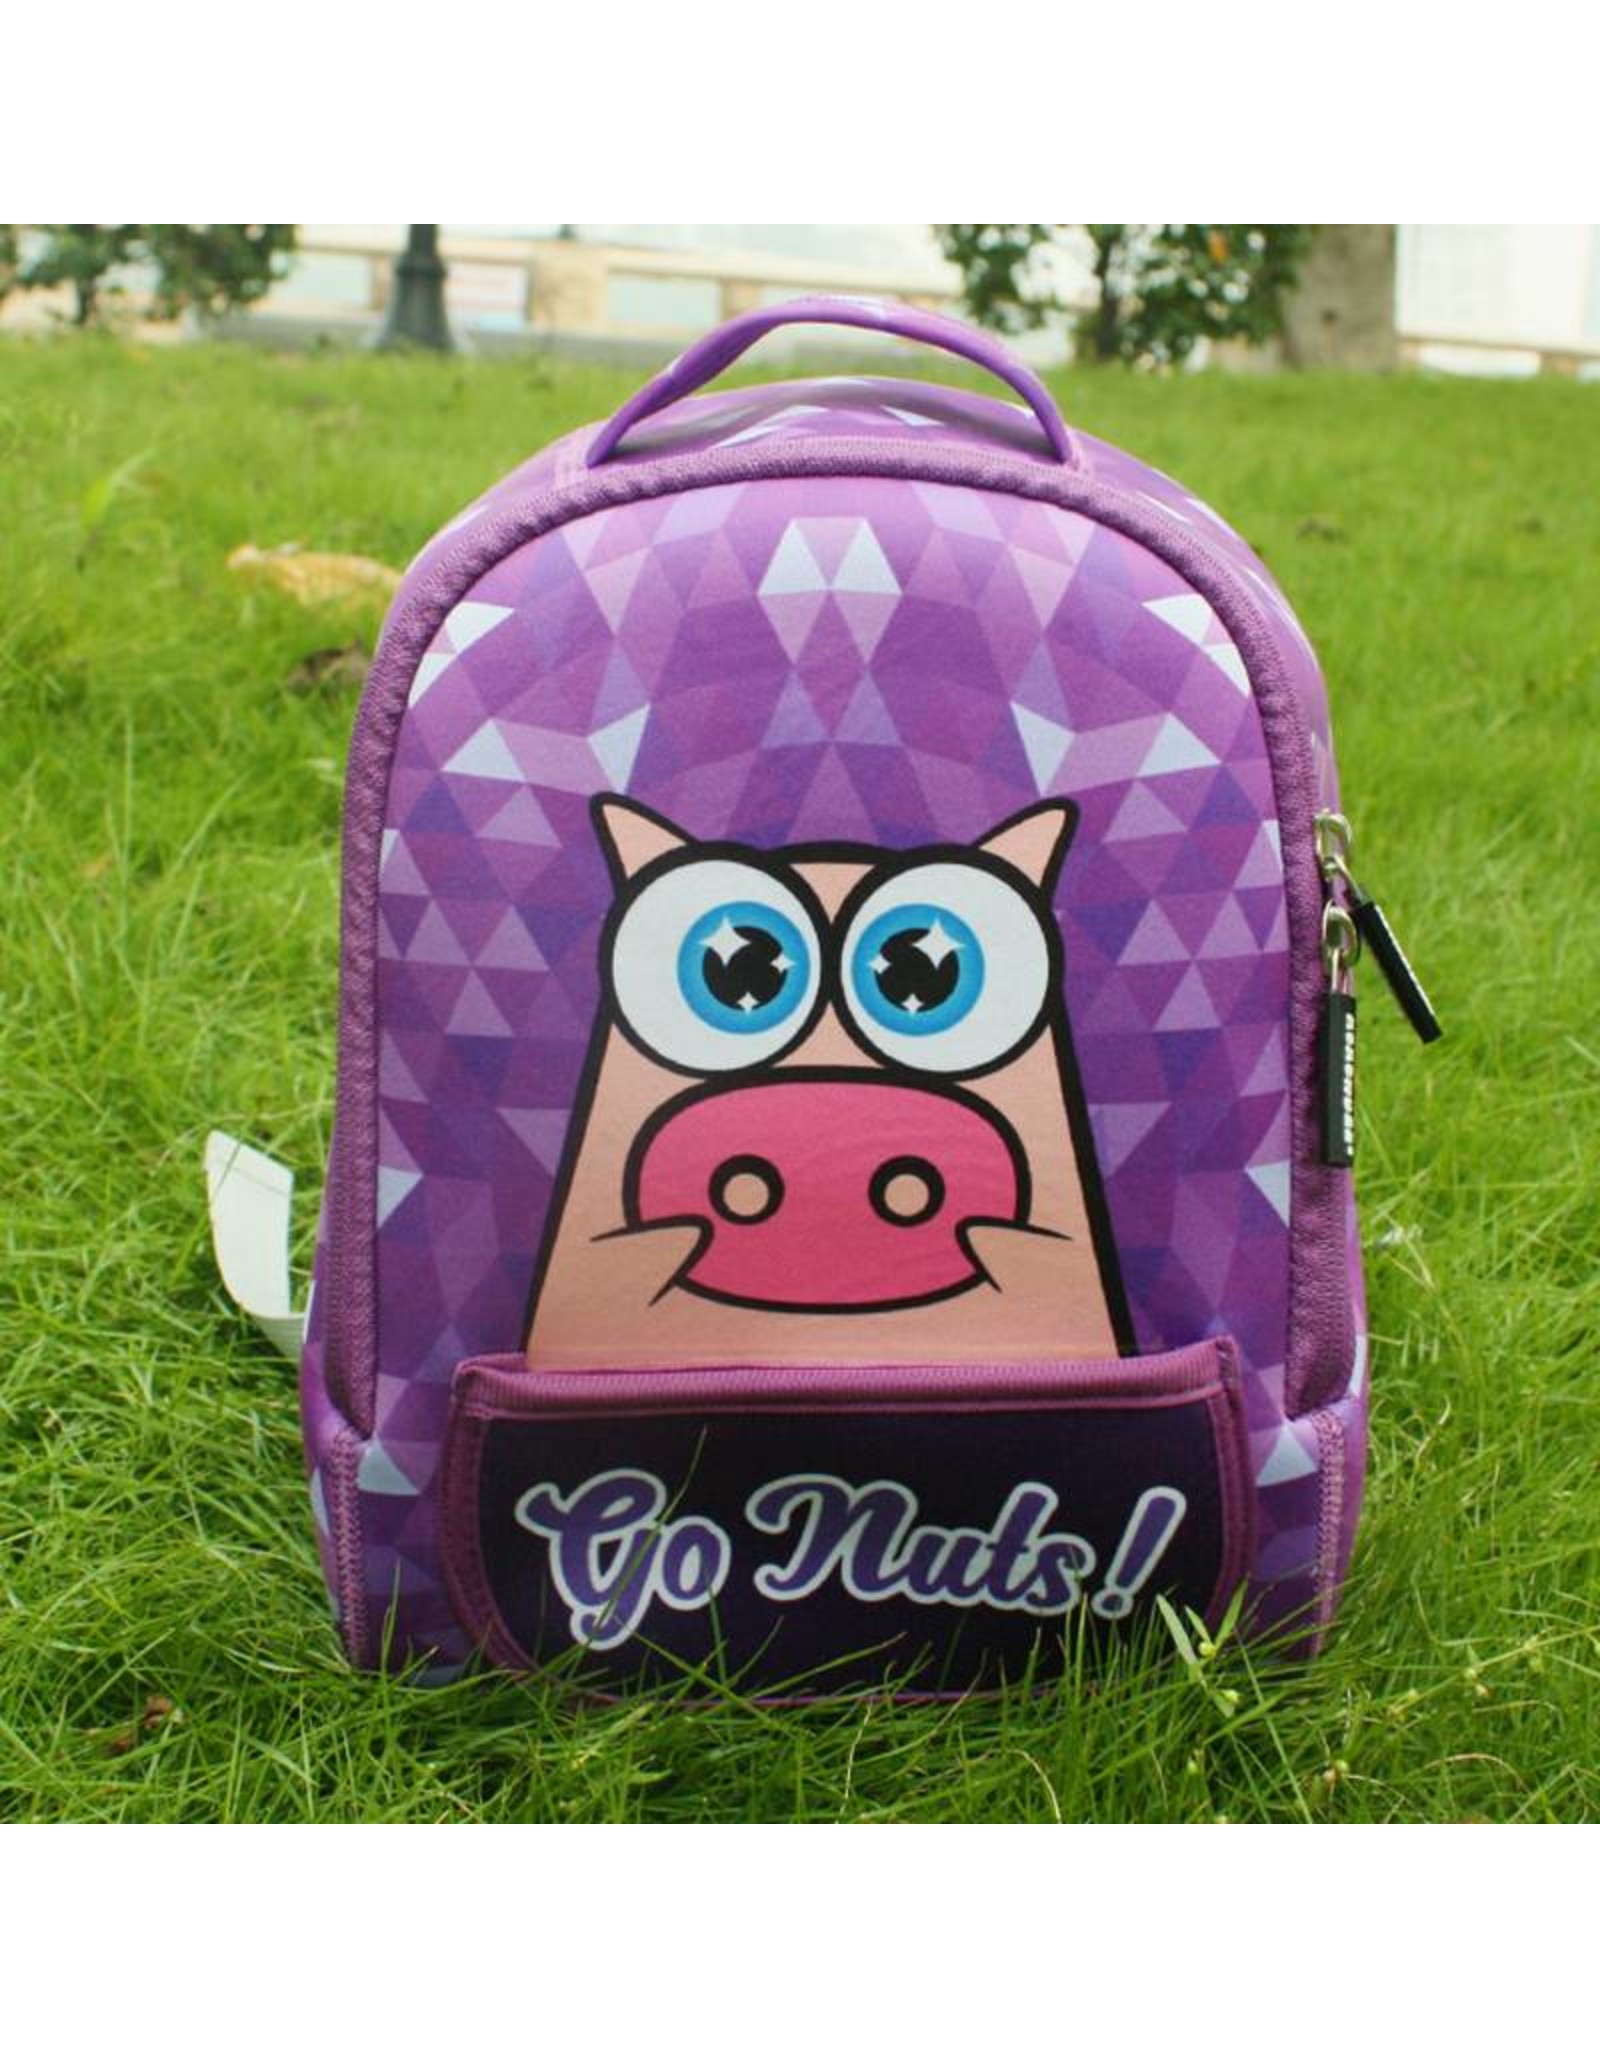 Childerns backpack Go Nuts (Purple)